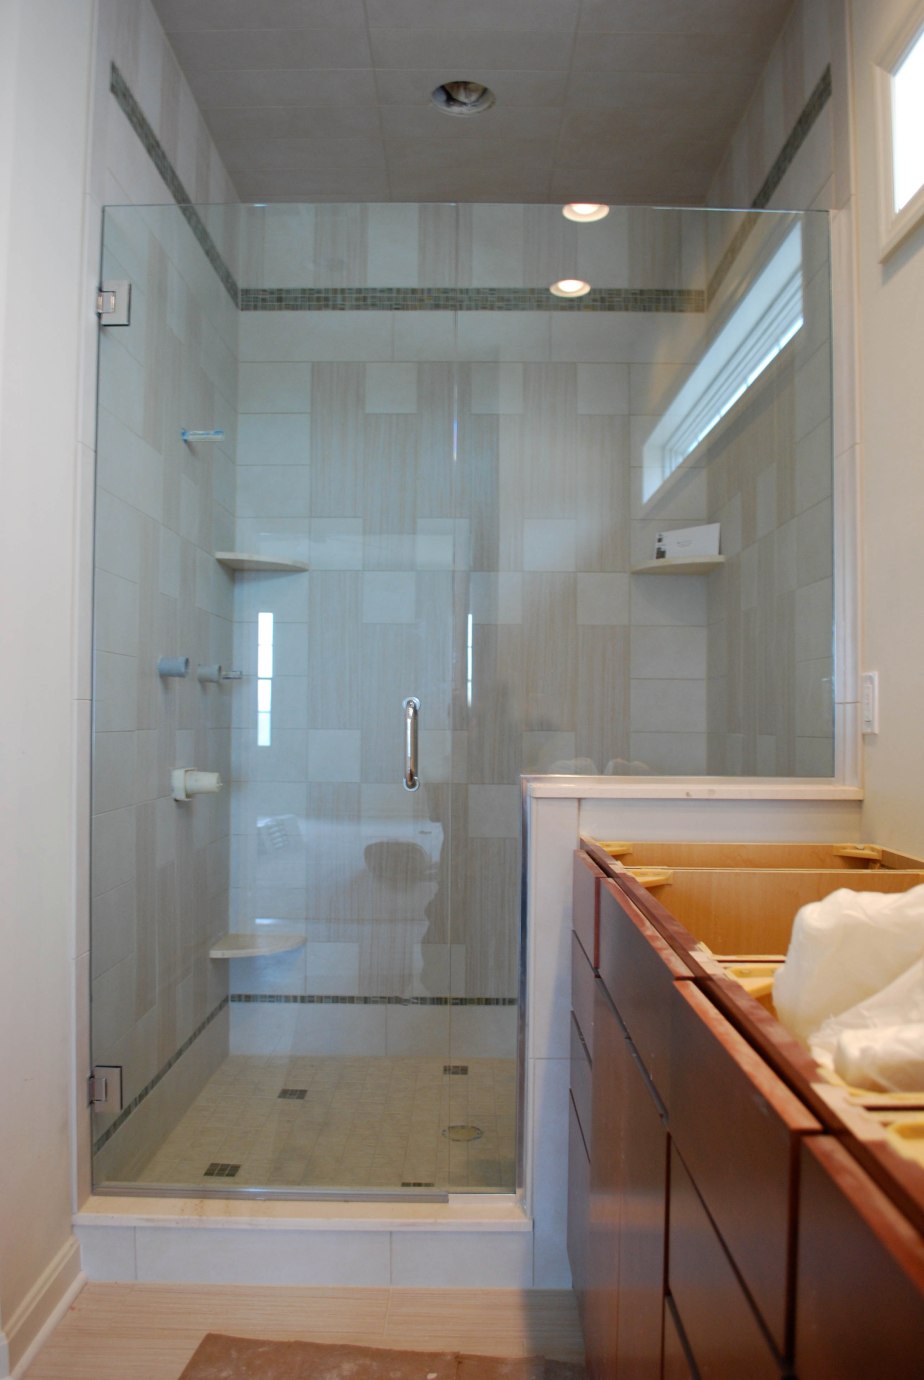 Bathroom New Header Free Shower Enclosure System Do It Frameless Frameless Shower Doors Cost With Modern Glass Shower Door Design